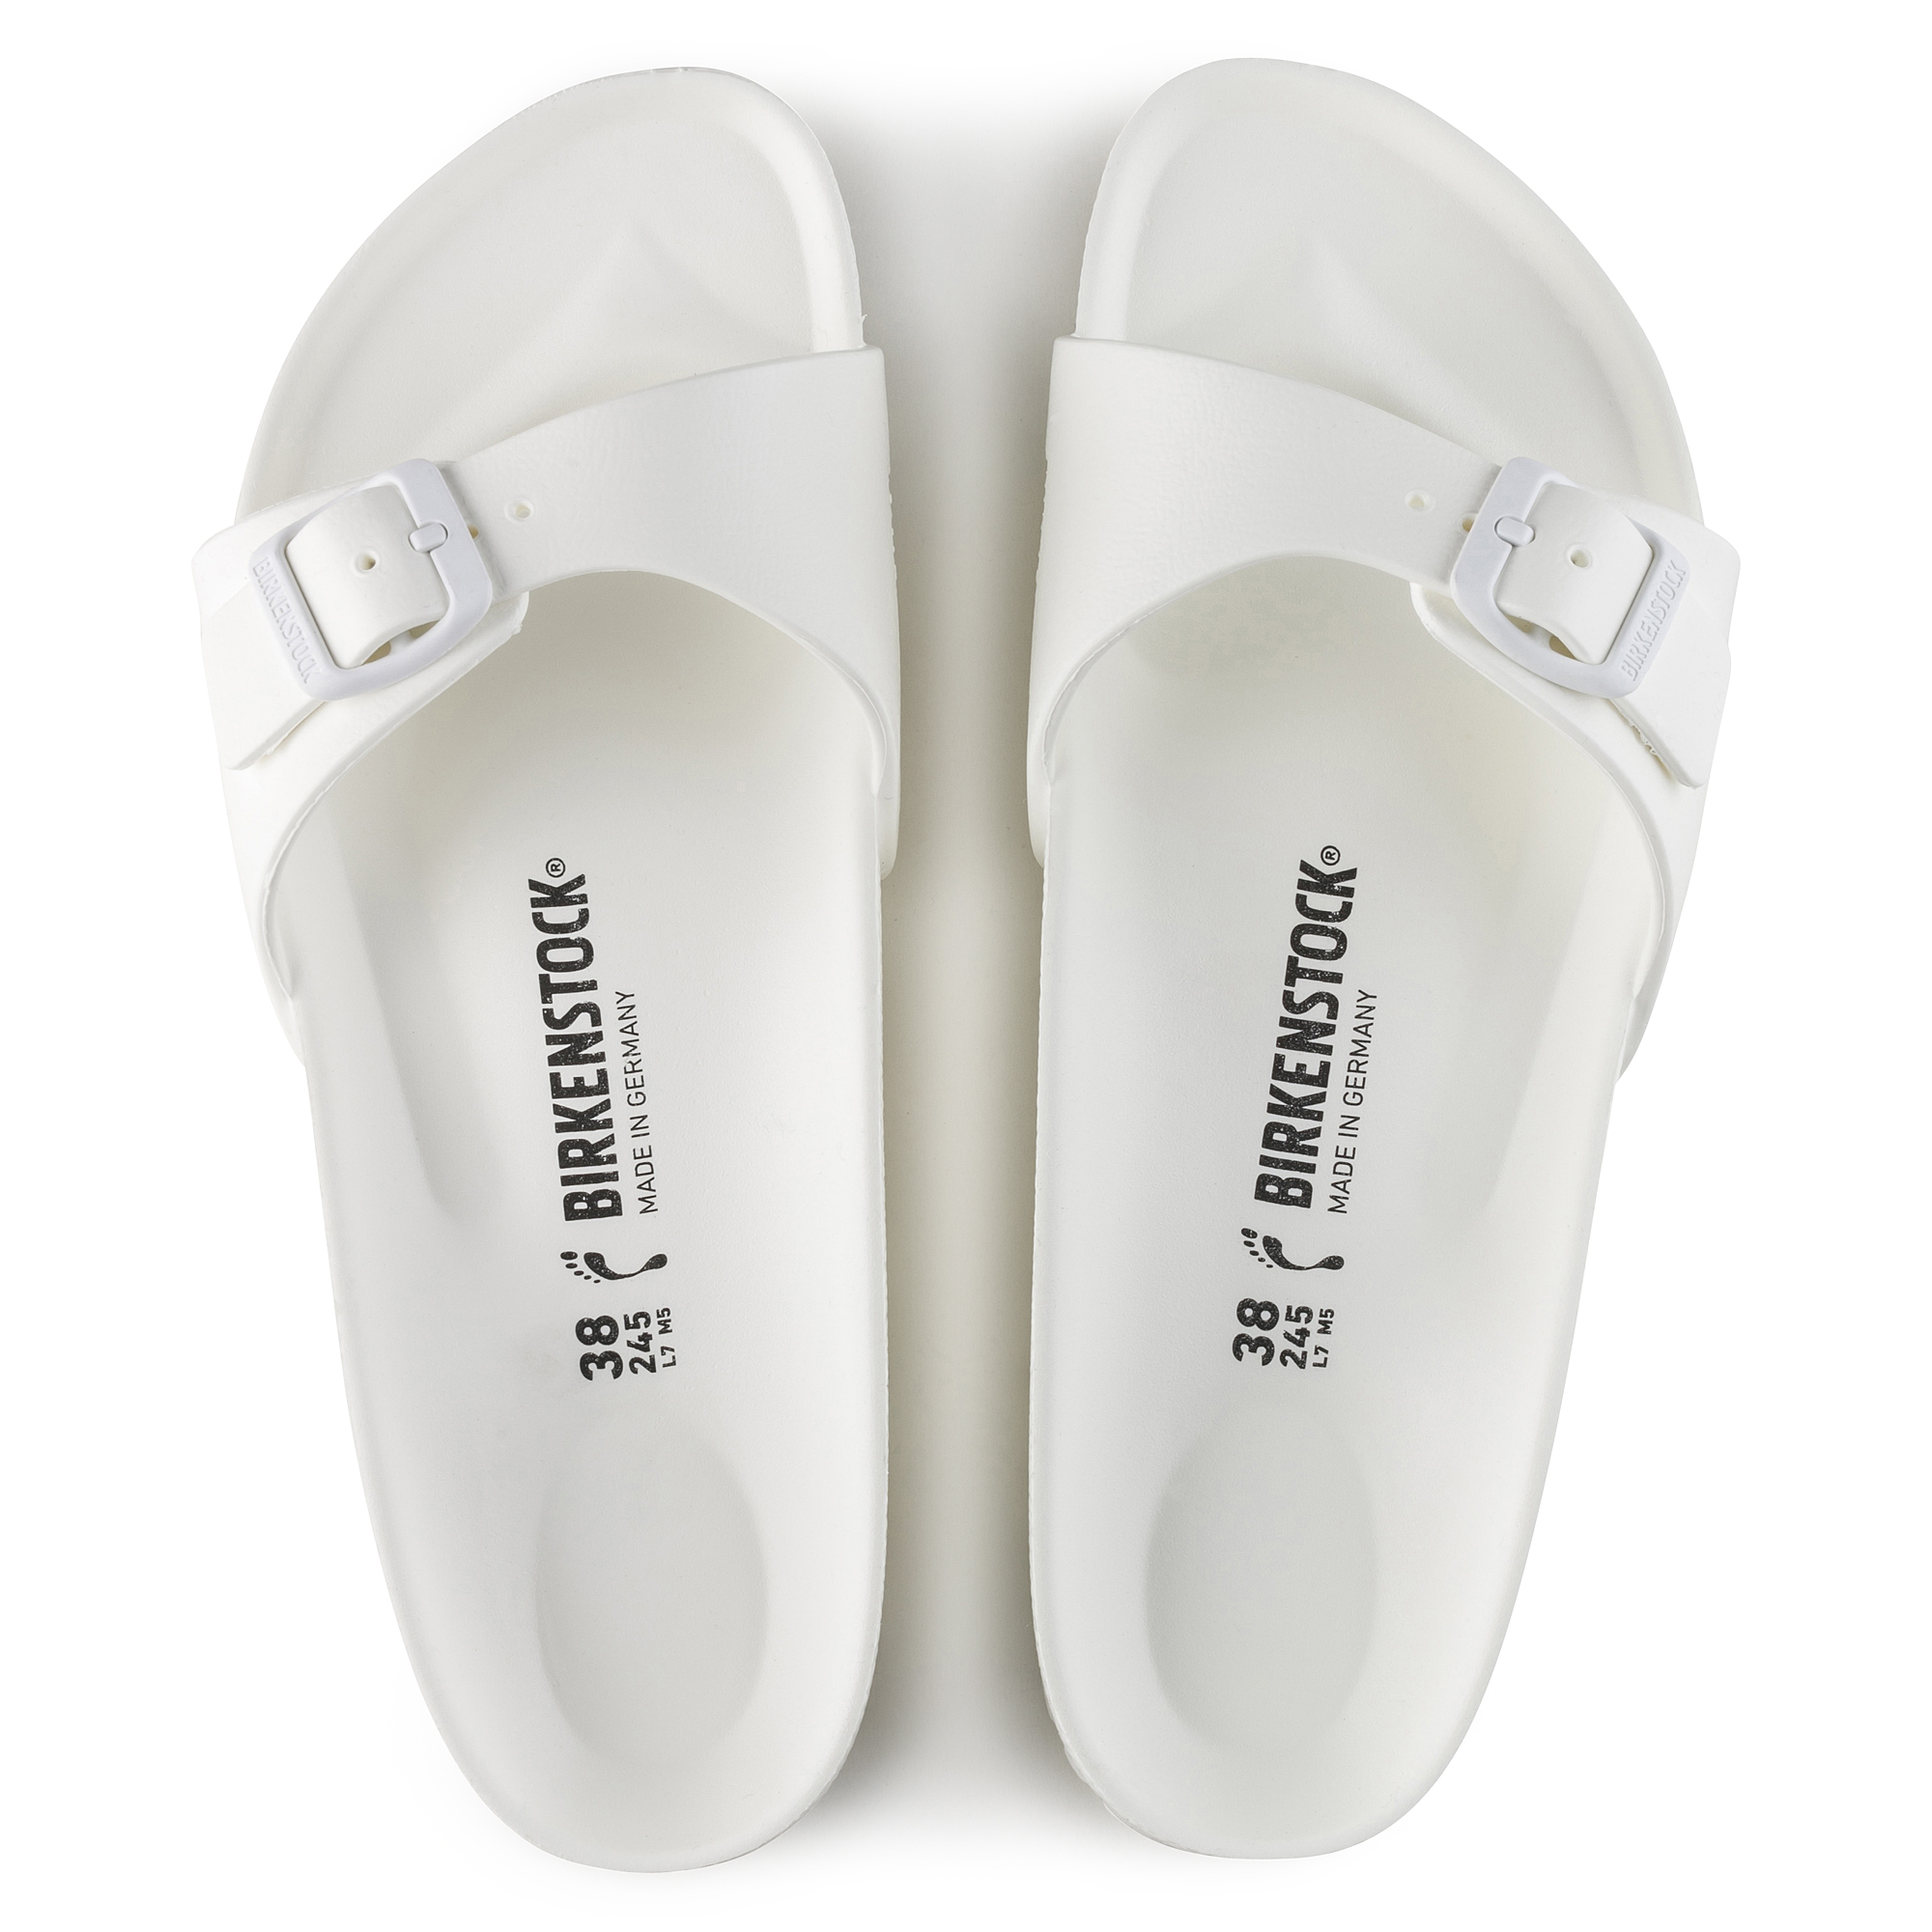 birkenstock white rubber sandals